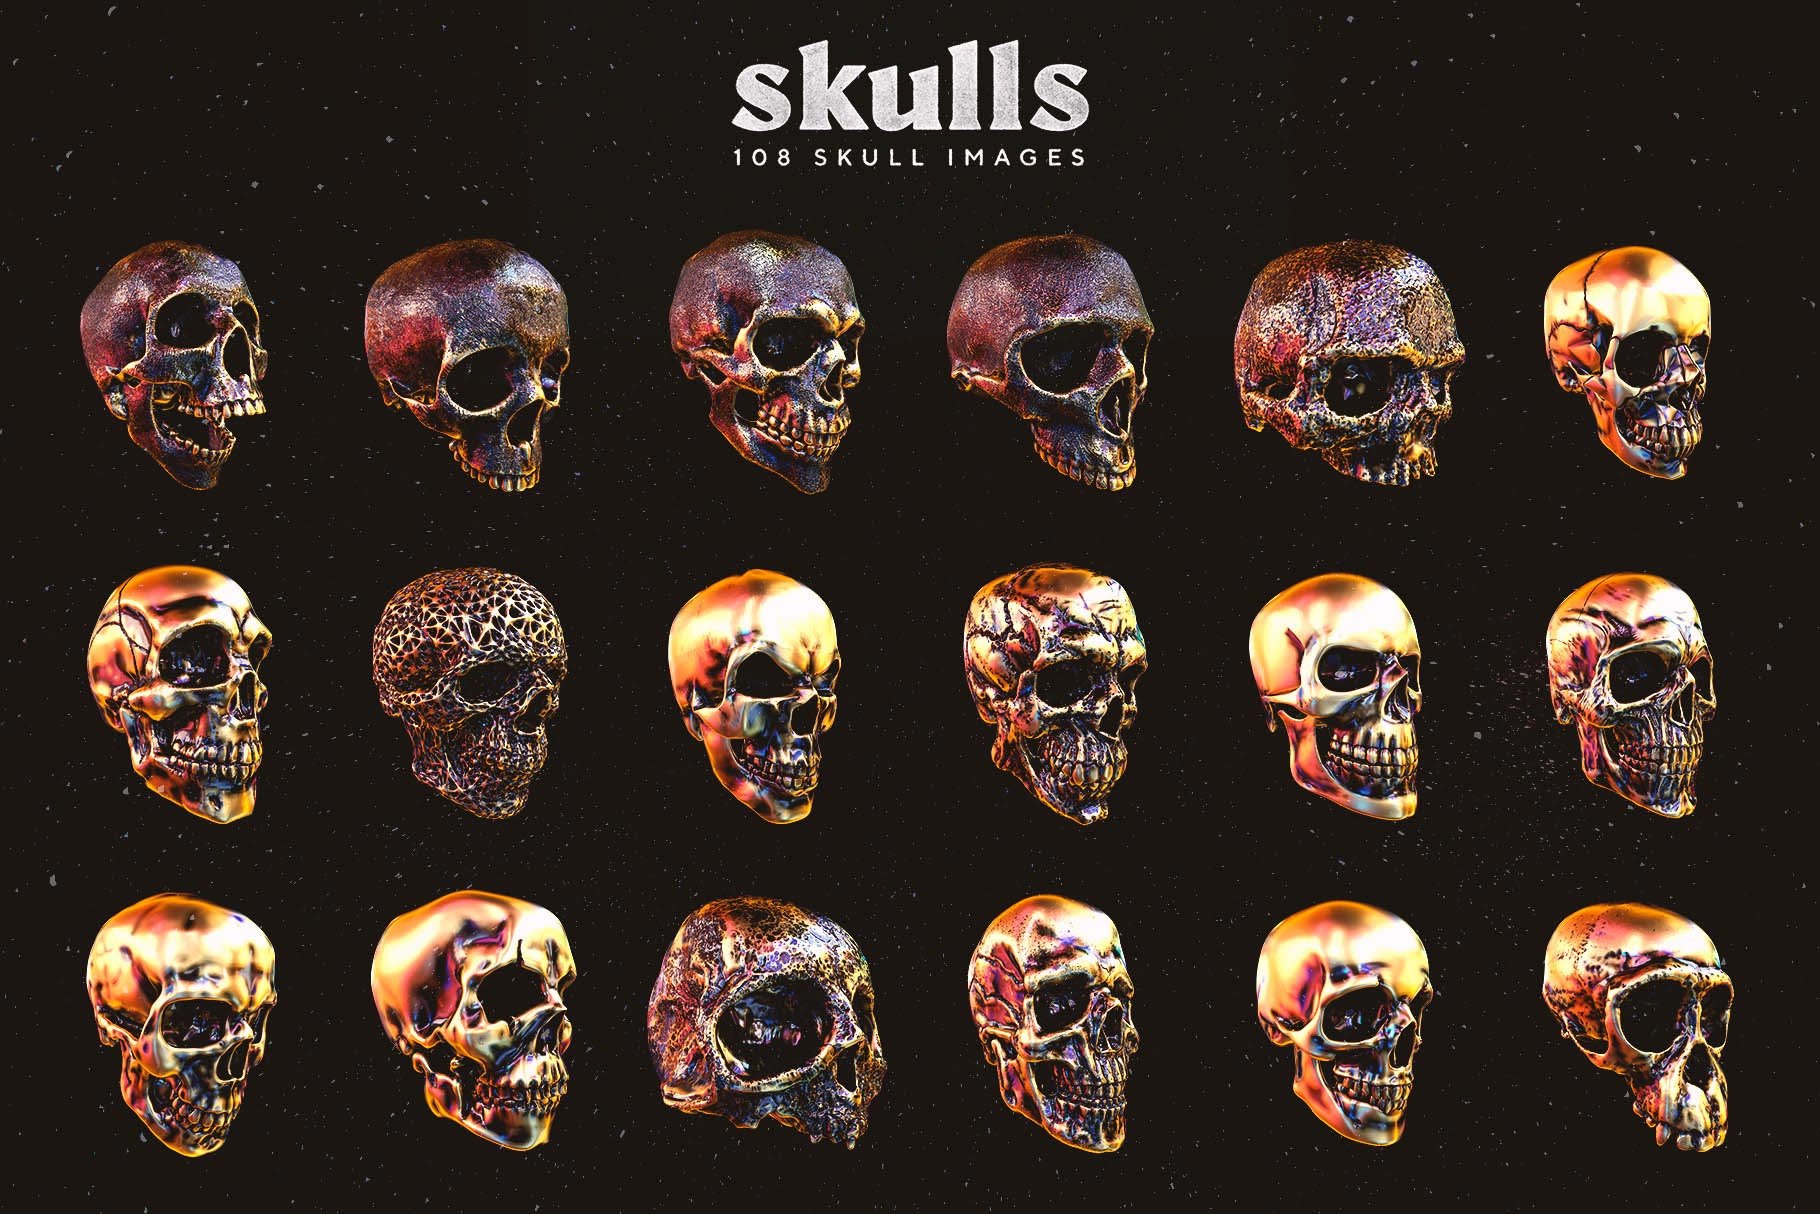 Skulls 108个高分辨率骷髅头骨逼真骨骼金属纹理PNG素材 图片素材 第5张